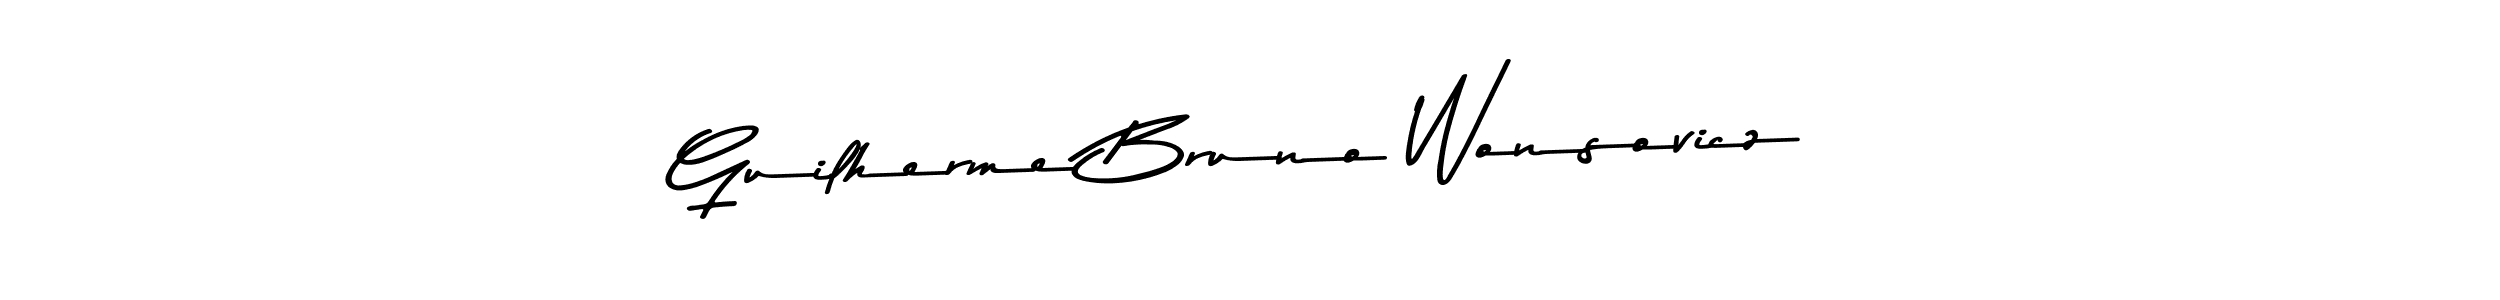 Best and Professional Signature Style for Guilherme Bruno Wonsovicz. Asem Kandis PERSONAL USE Best Signature Style Collection. Guilherme Bruno Wonsovicz signature style 9 images and pictures png